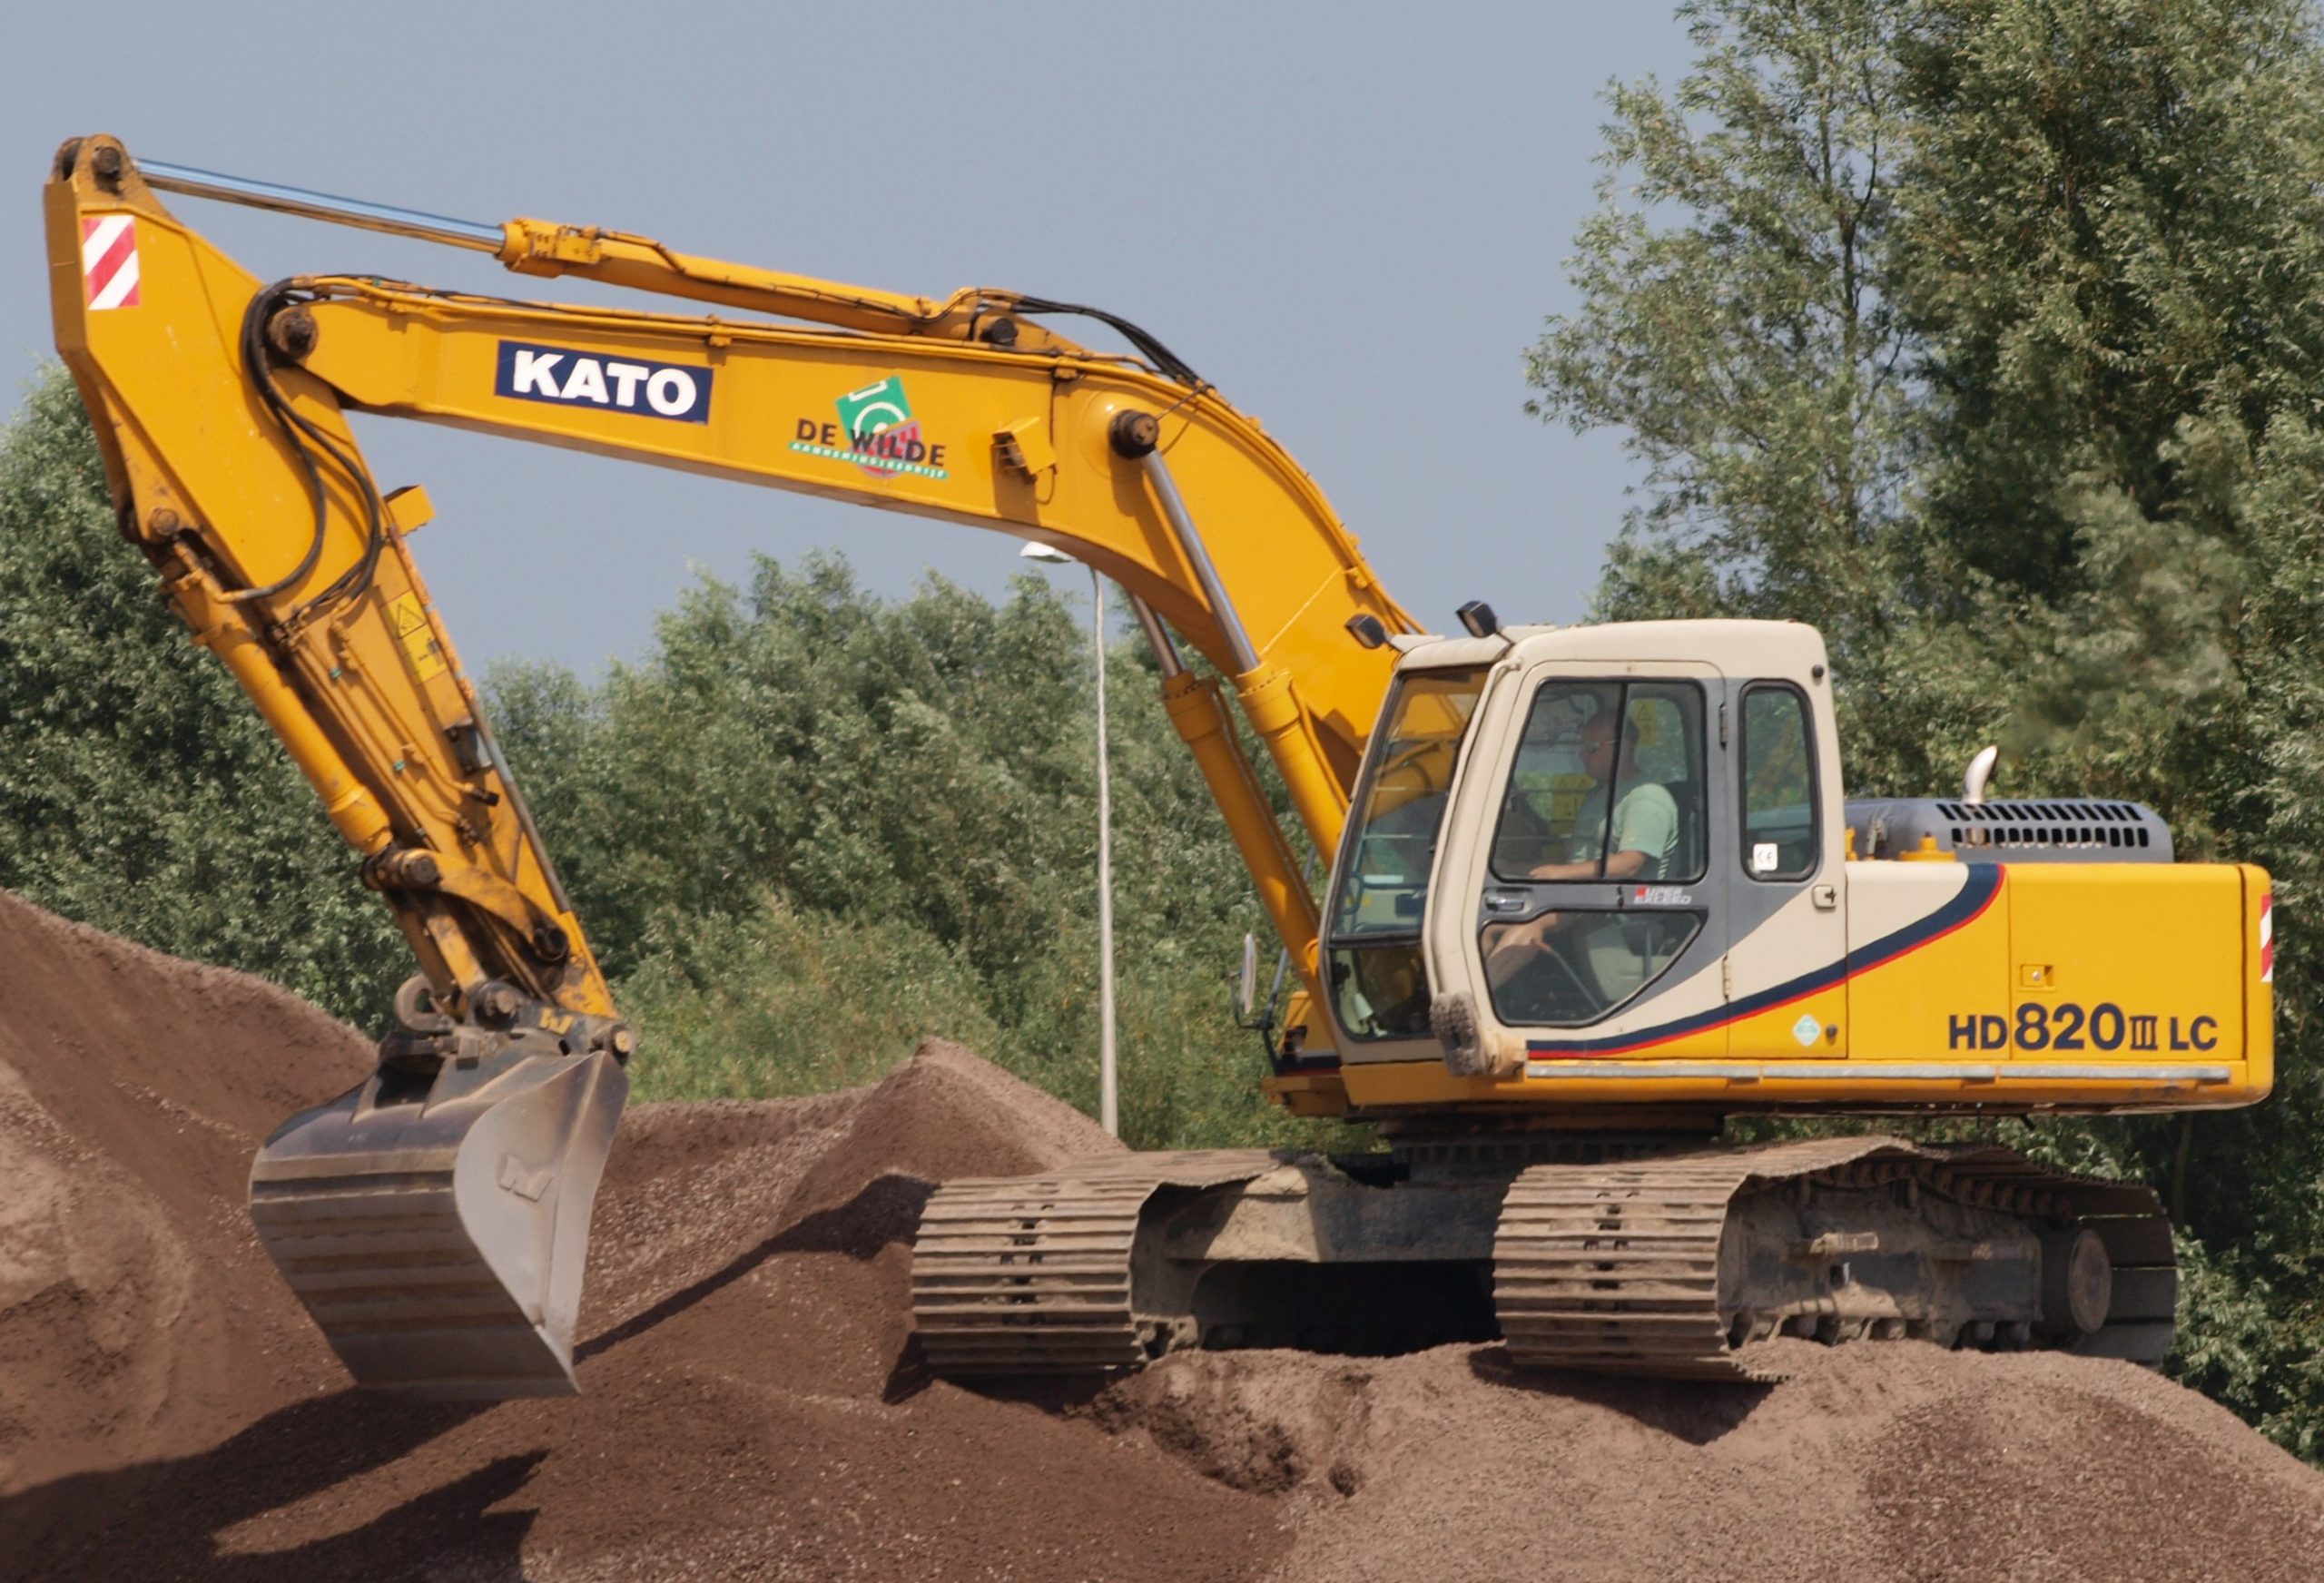 Kato HD820 III Super Exceed Fully Hydraulic Excavator Parts List Manual